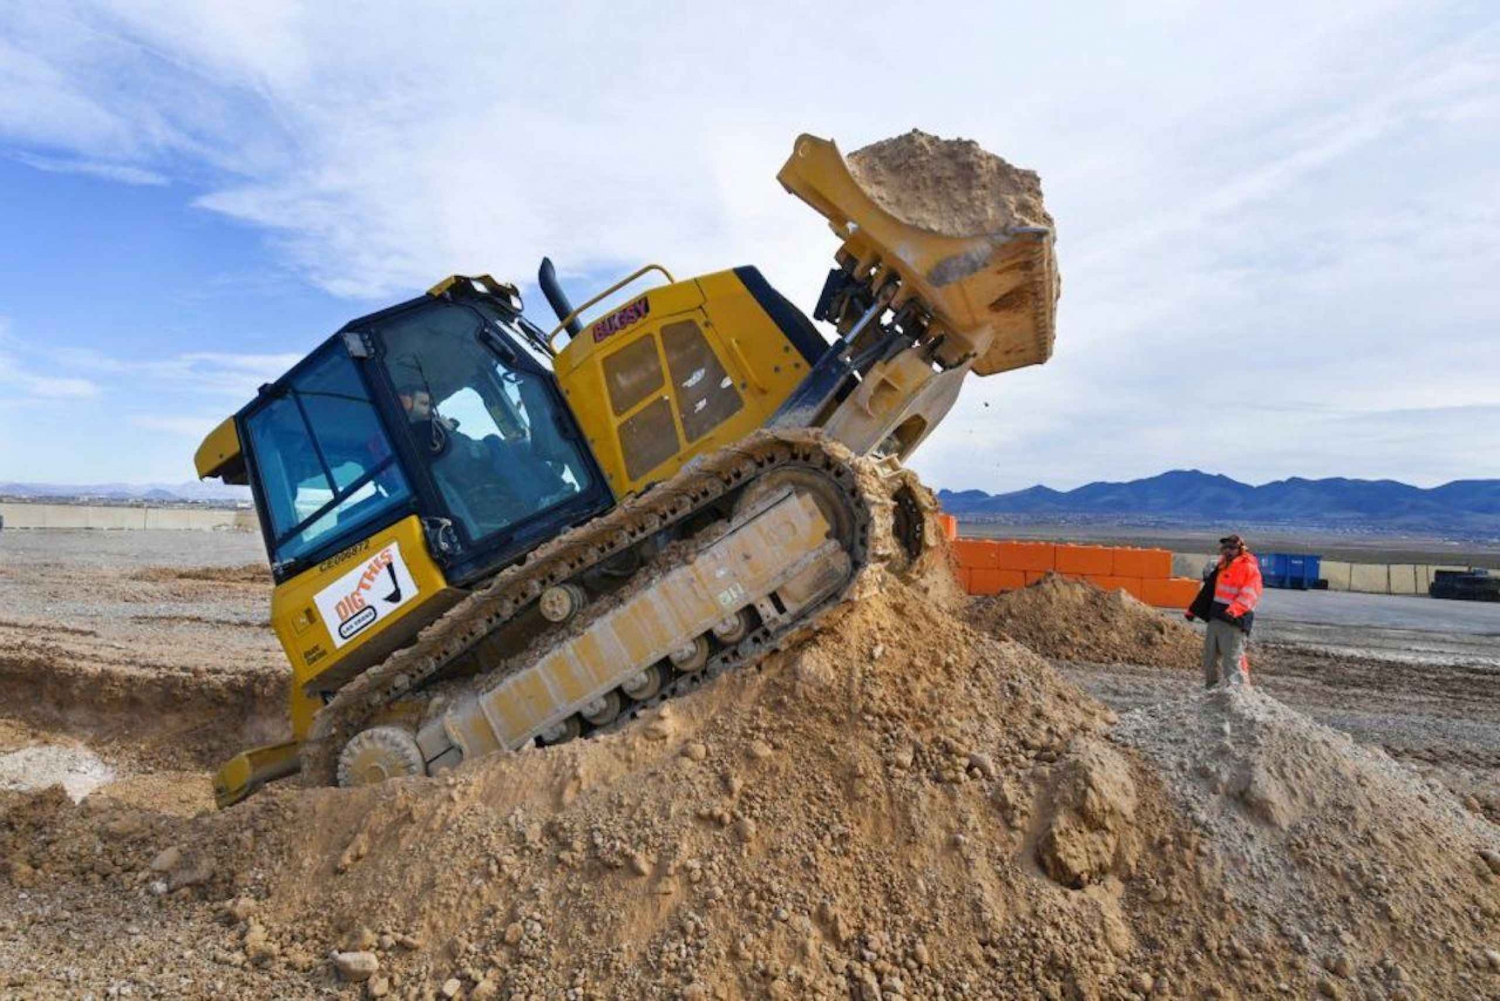 Las Vegas: Dig This - Playground para equipamentos pesados